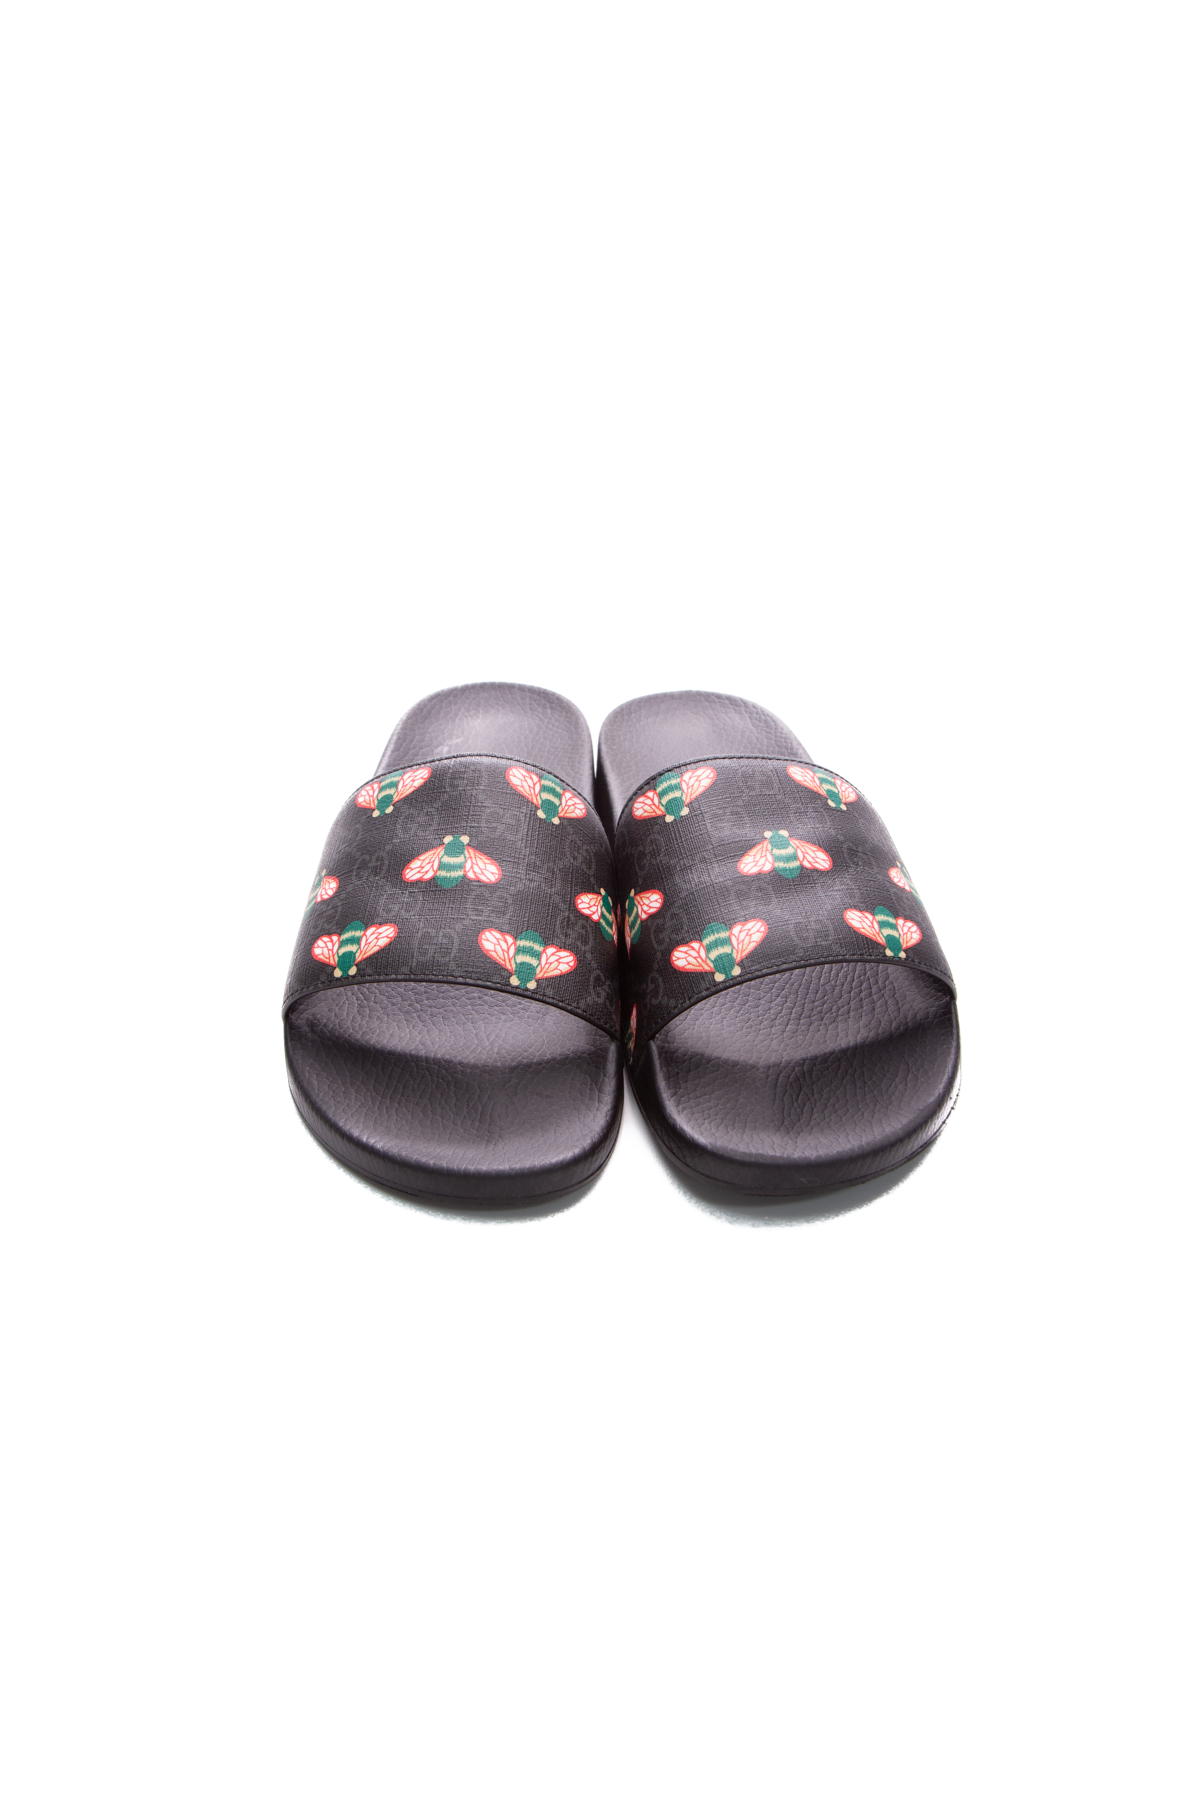 Gucci Mens Bee Slide Sandals - Size 13